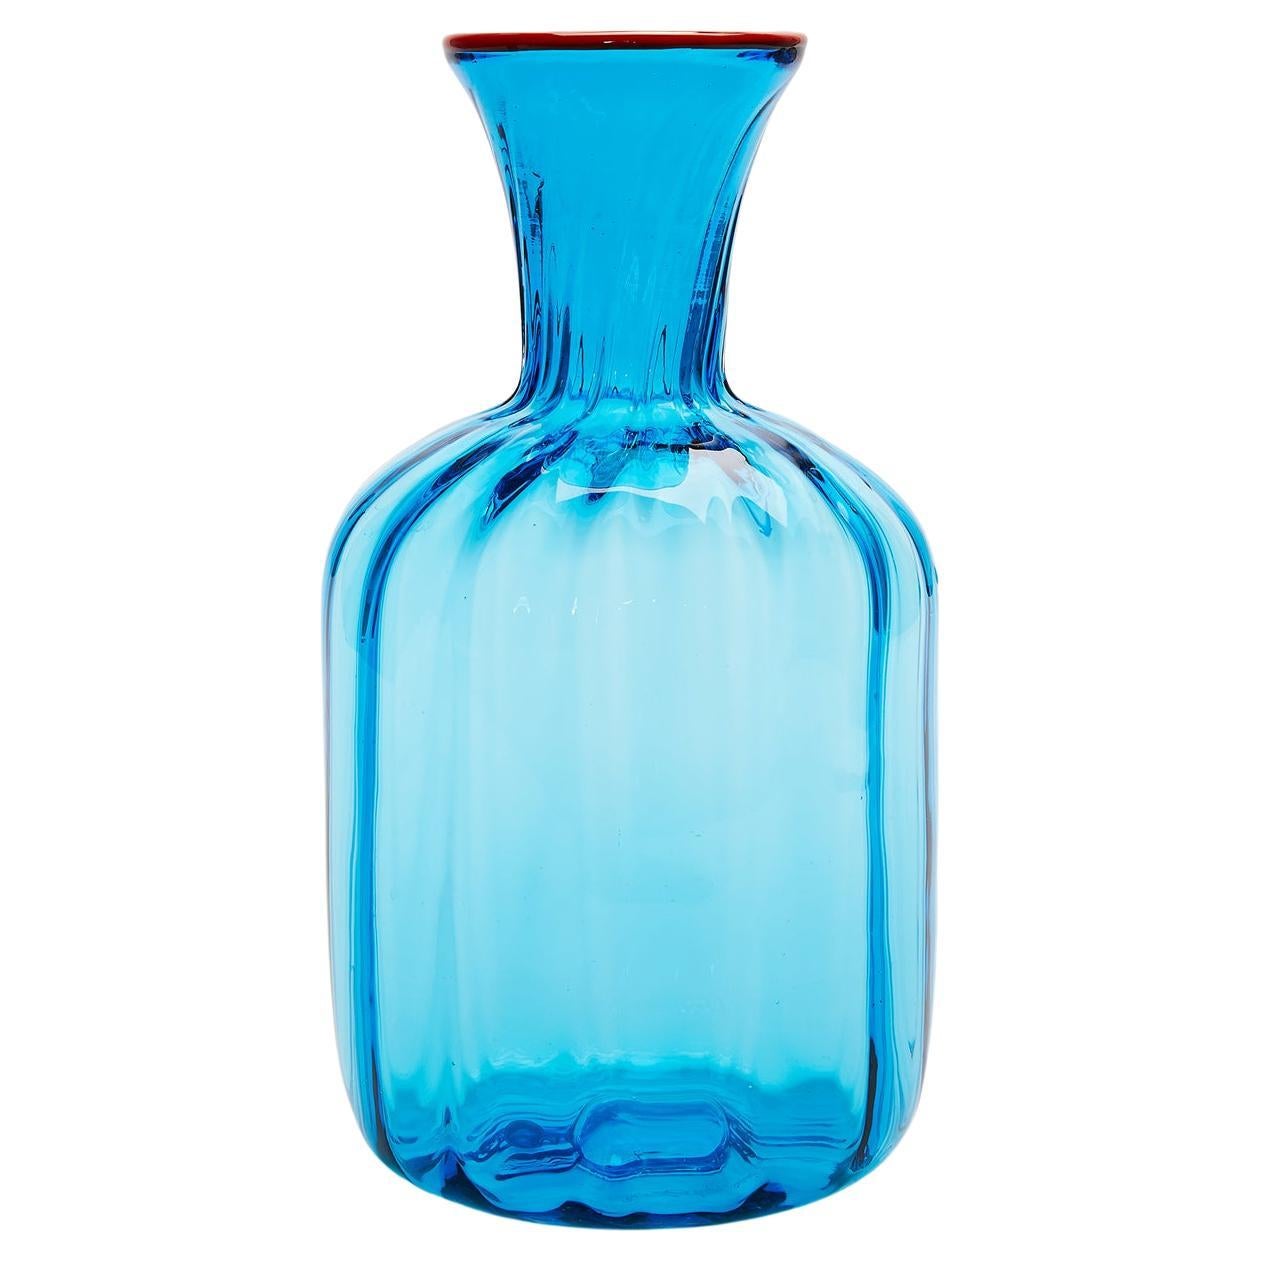 Murano Carafe Light Blue by La DoubleJ, Murano Glass, Made in Italy